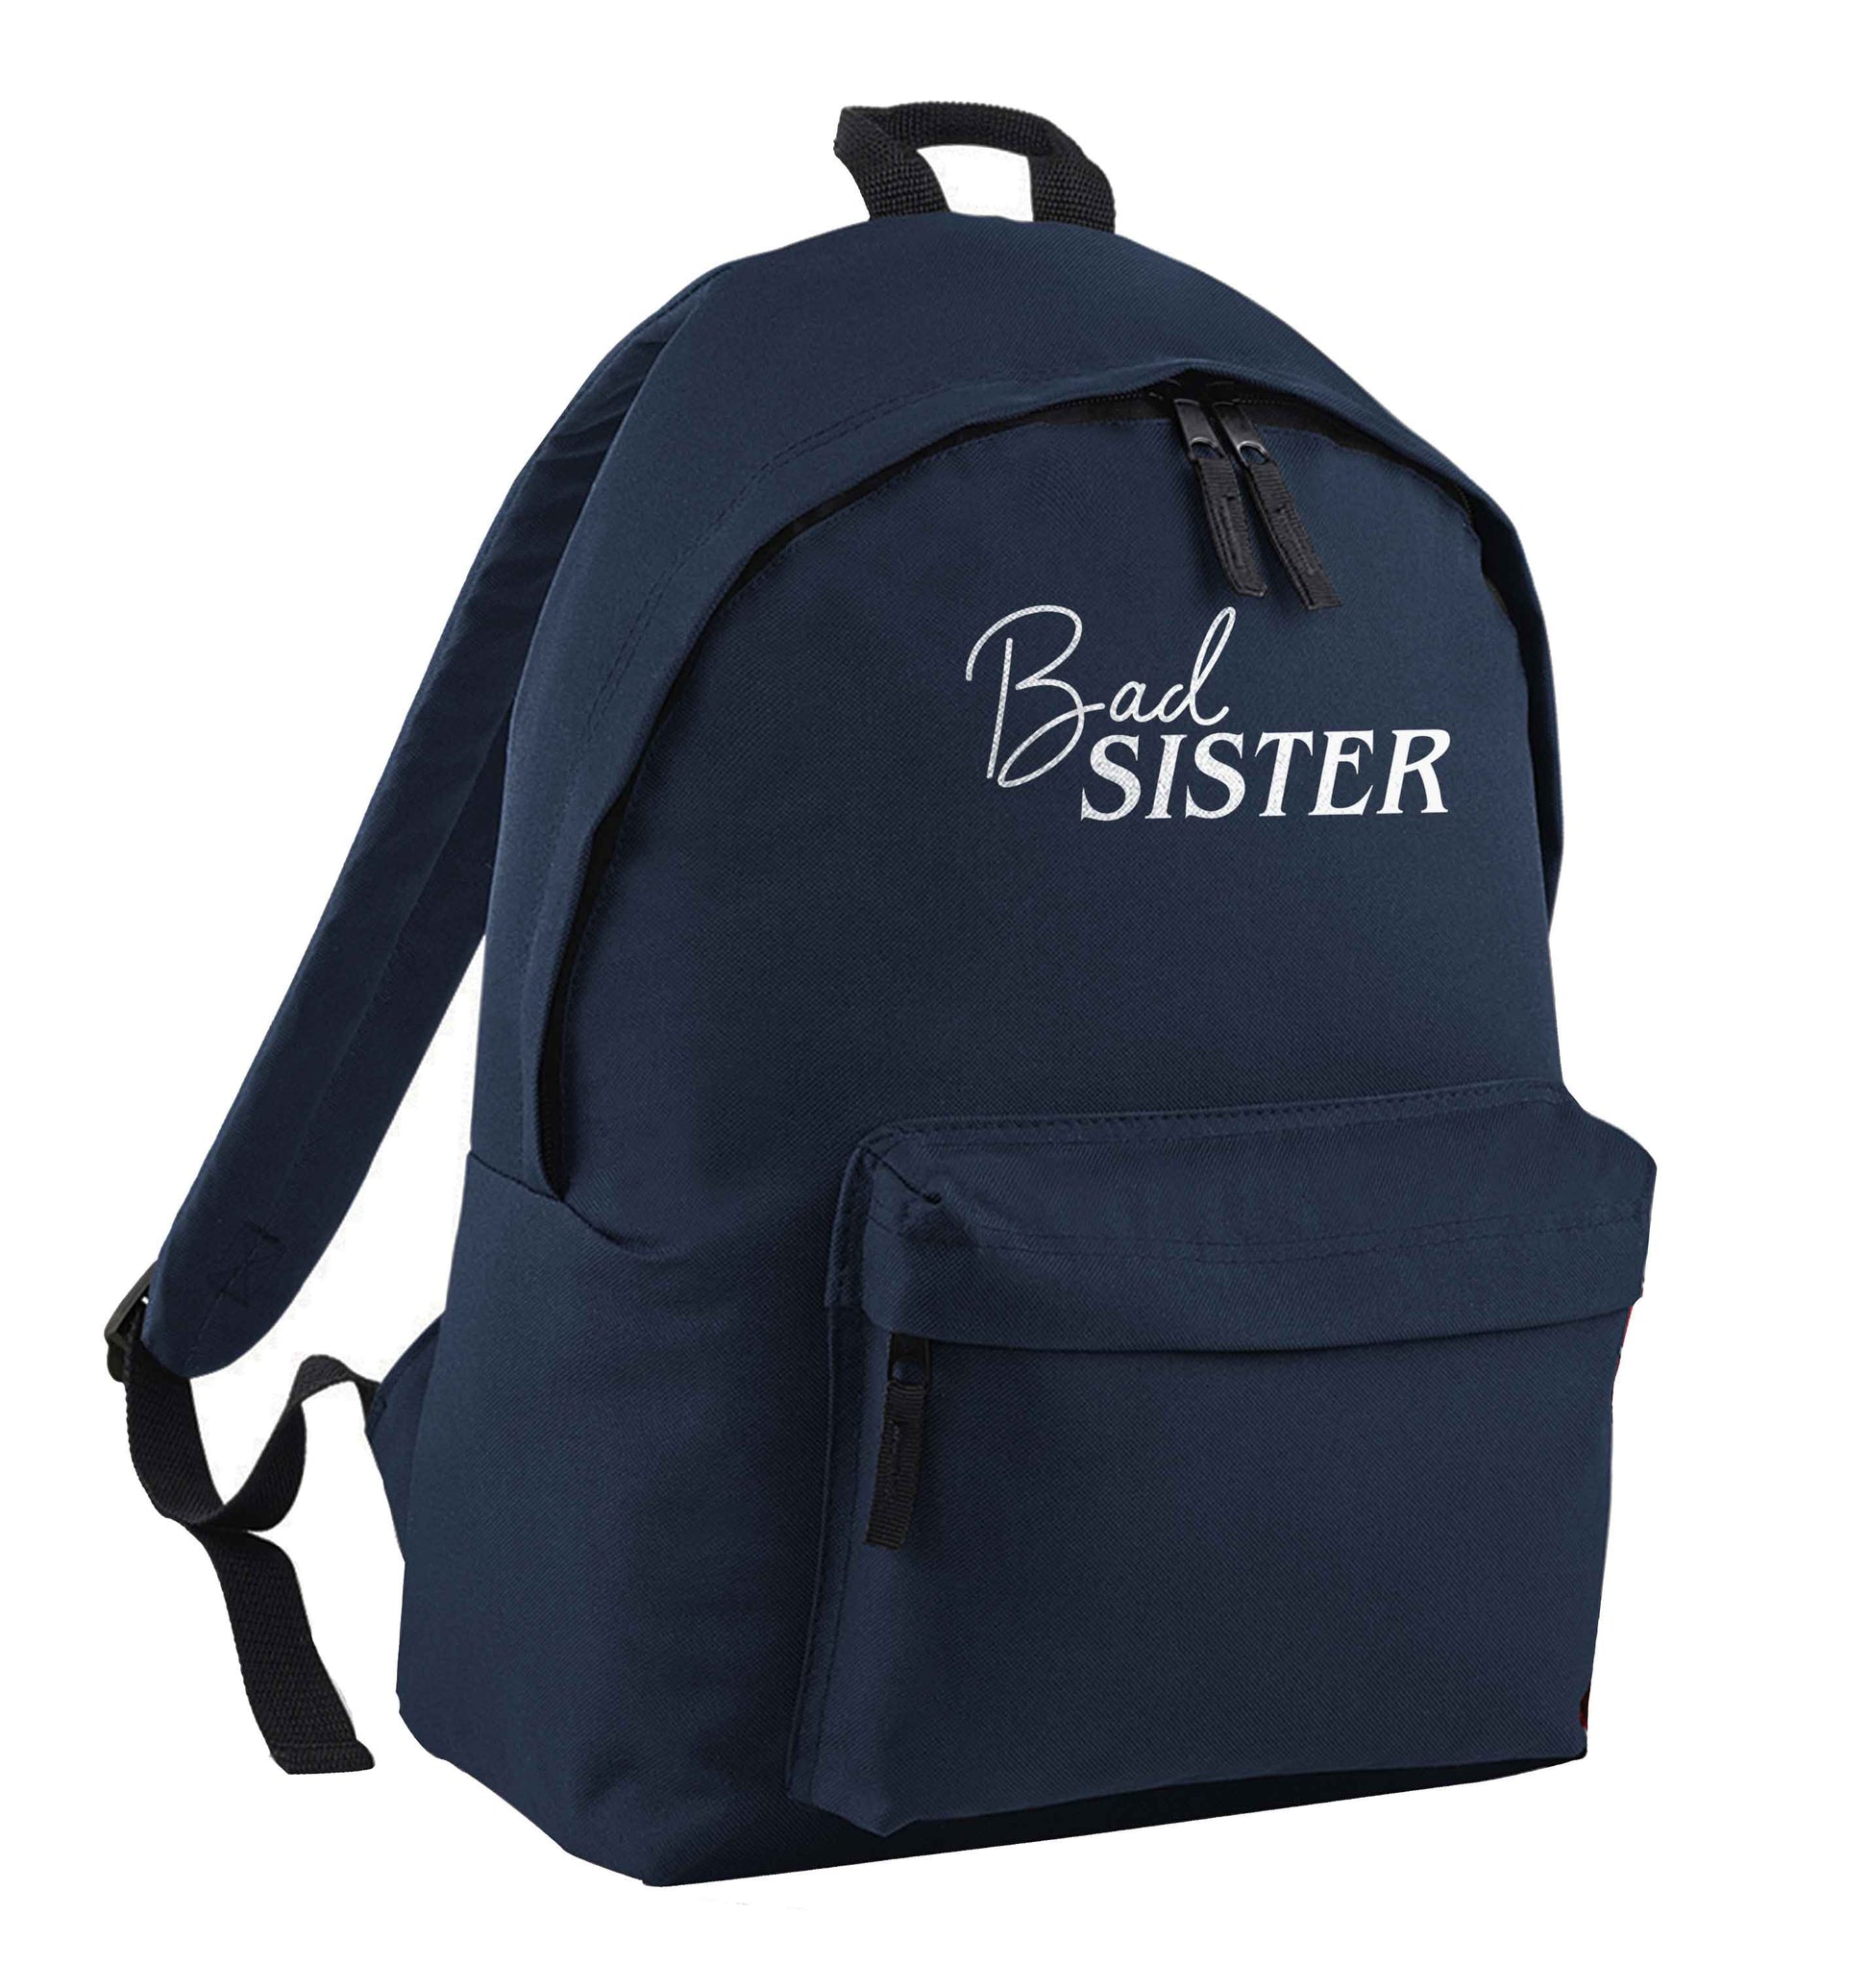 Bad sister navy adults backpack